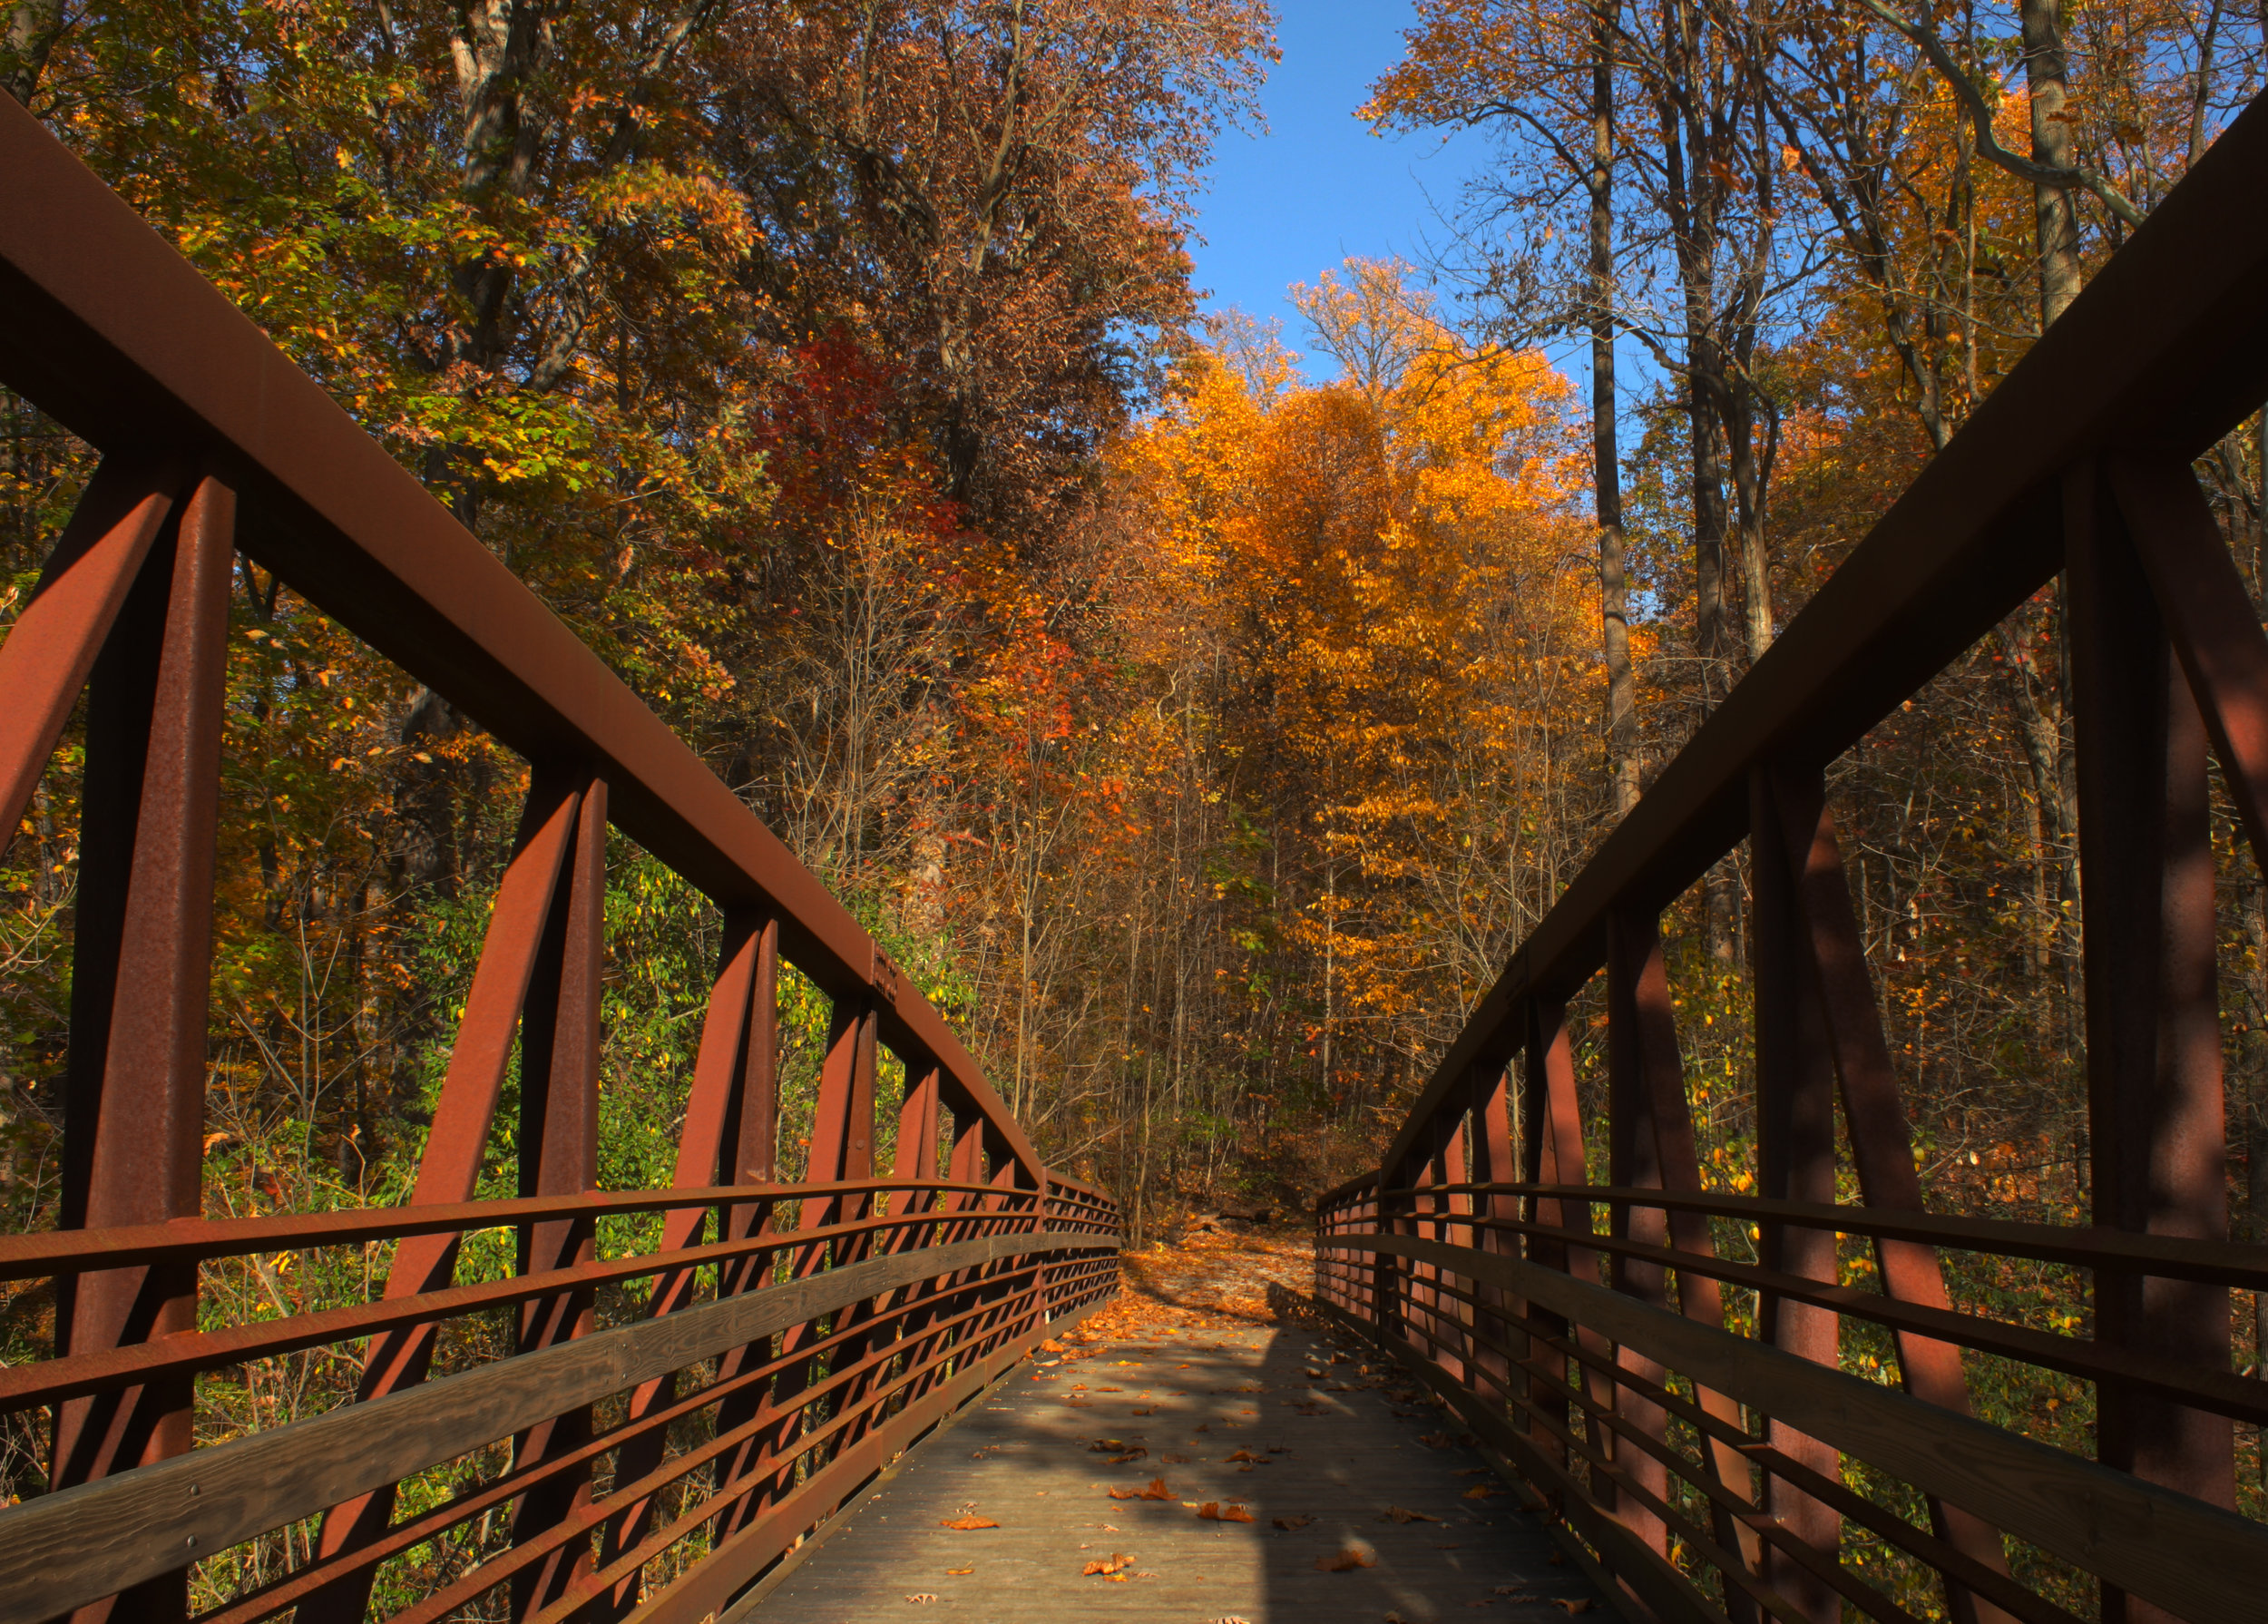 Autumn colors over the pedestrian walking bridge at Sheldon Woods